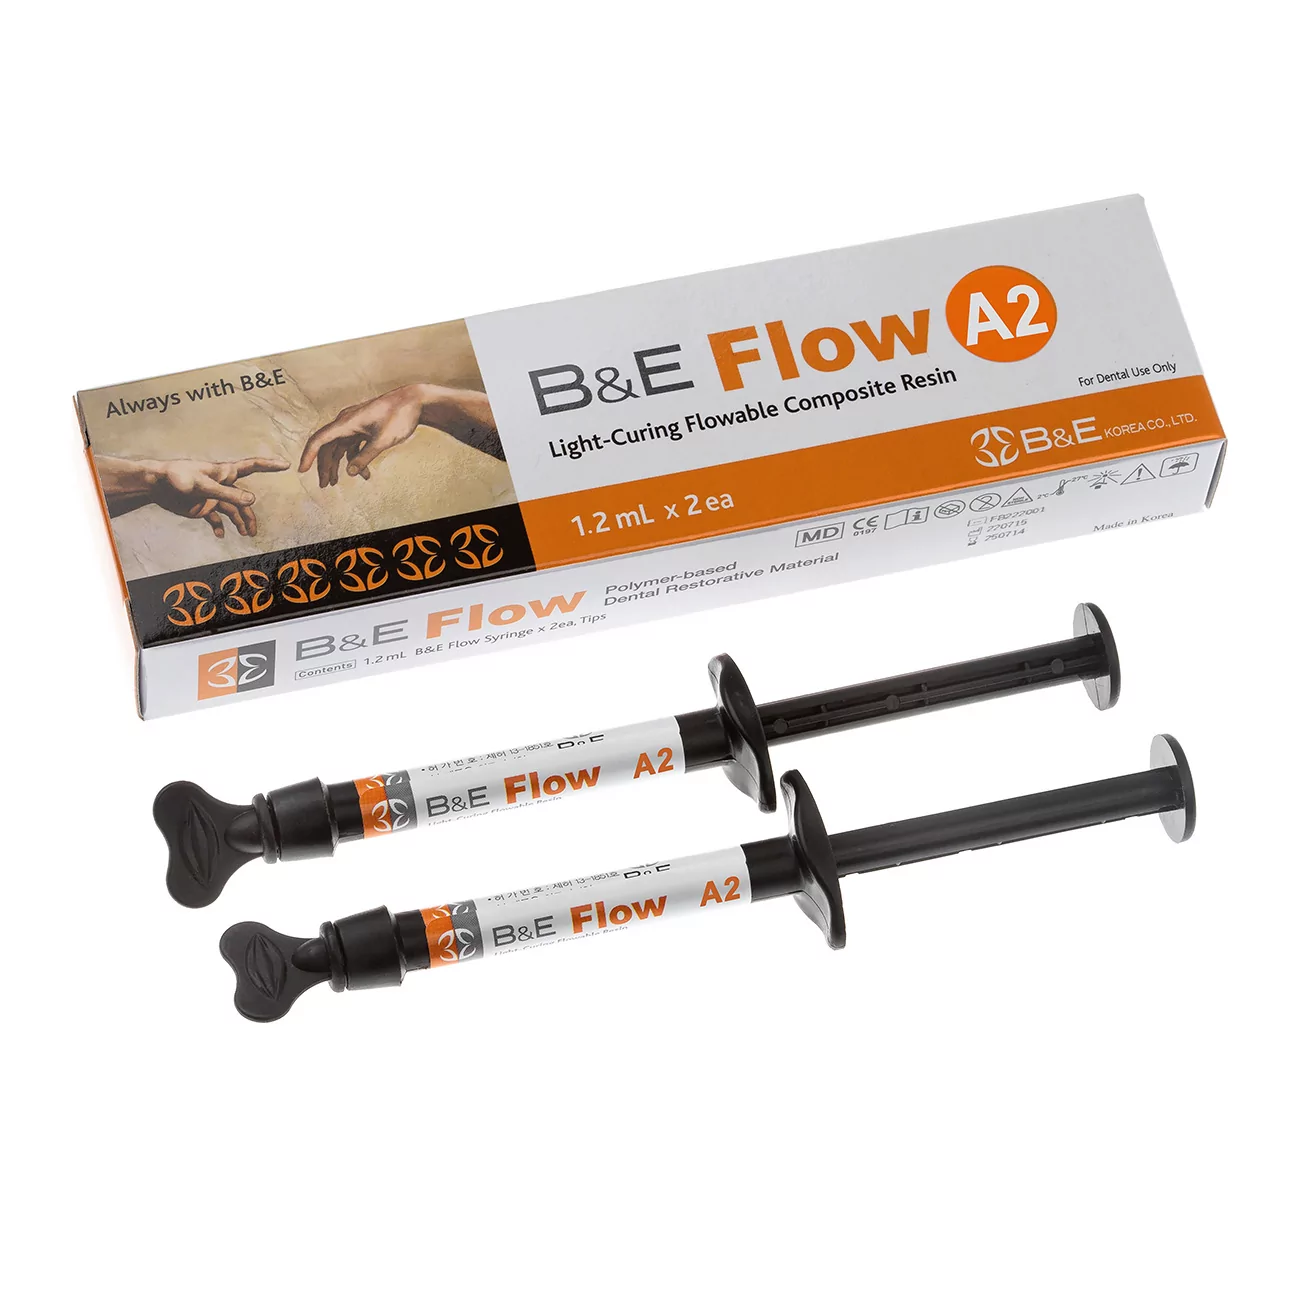 B&E Flow цвет A2 шприц 2гр.х2шт. Текучий светоотверждаемый композит, B&E Korea